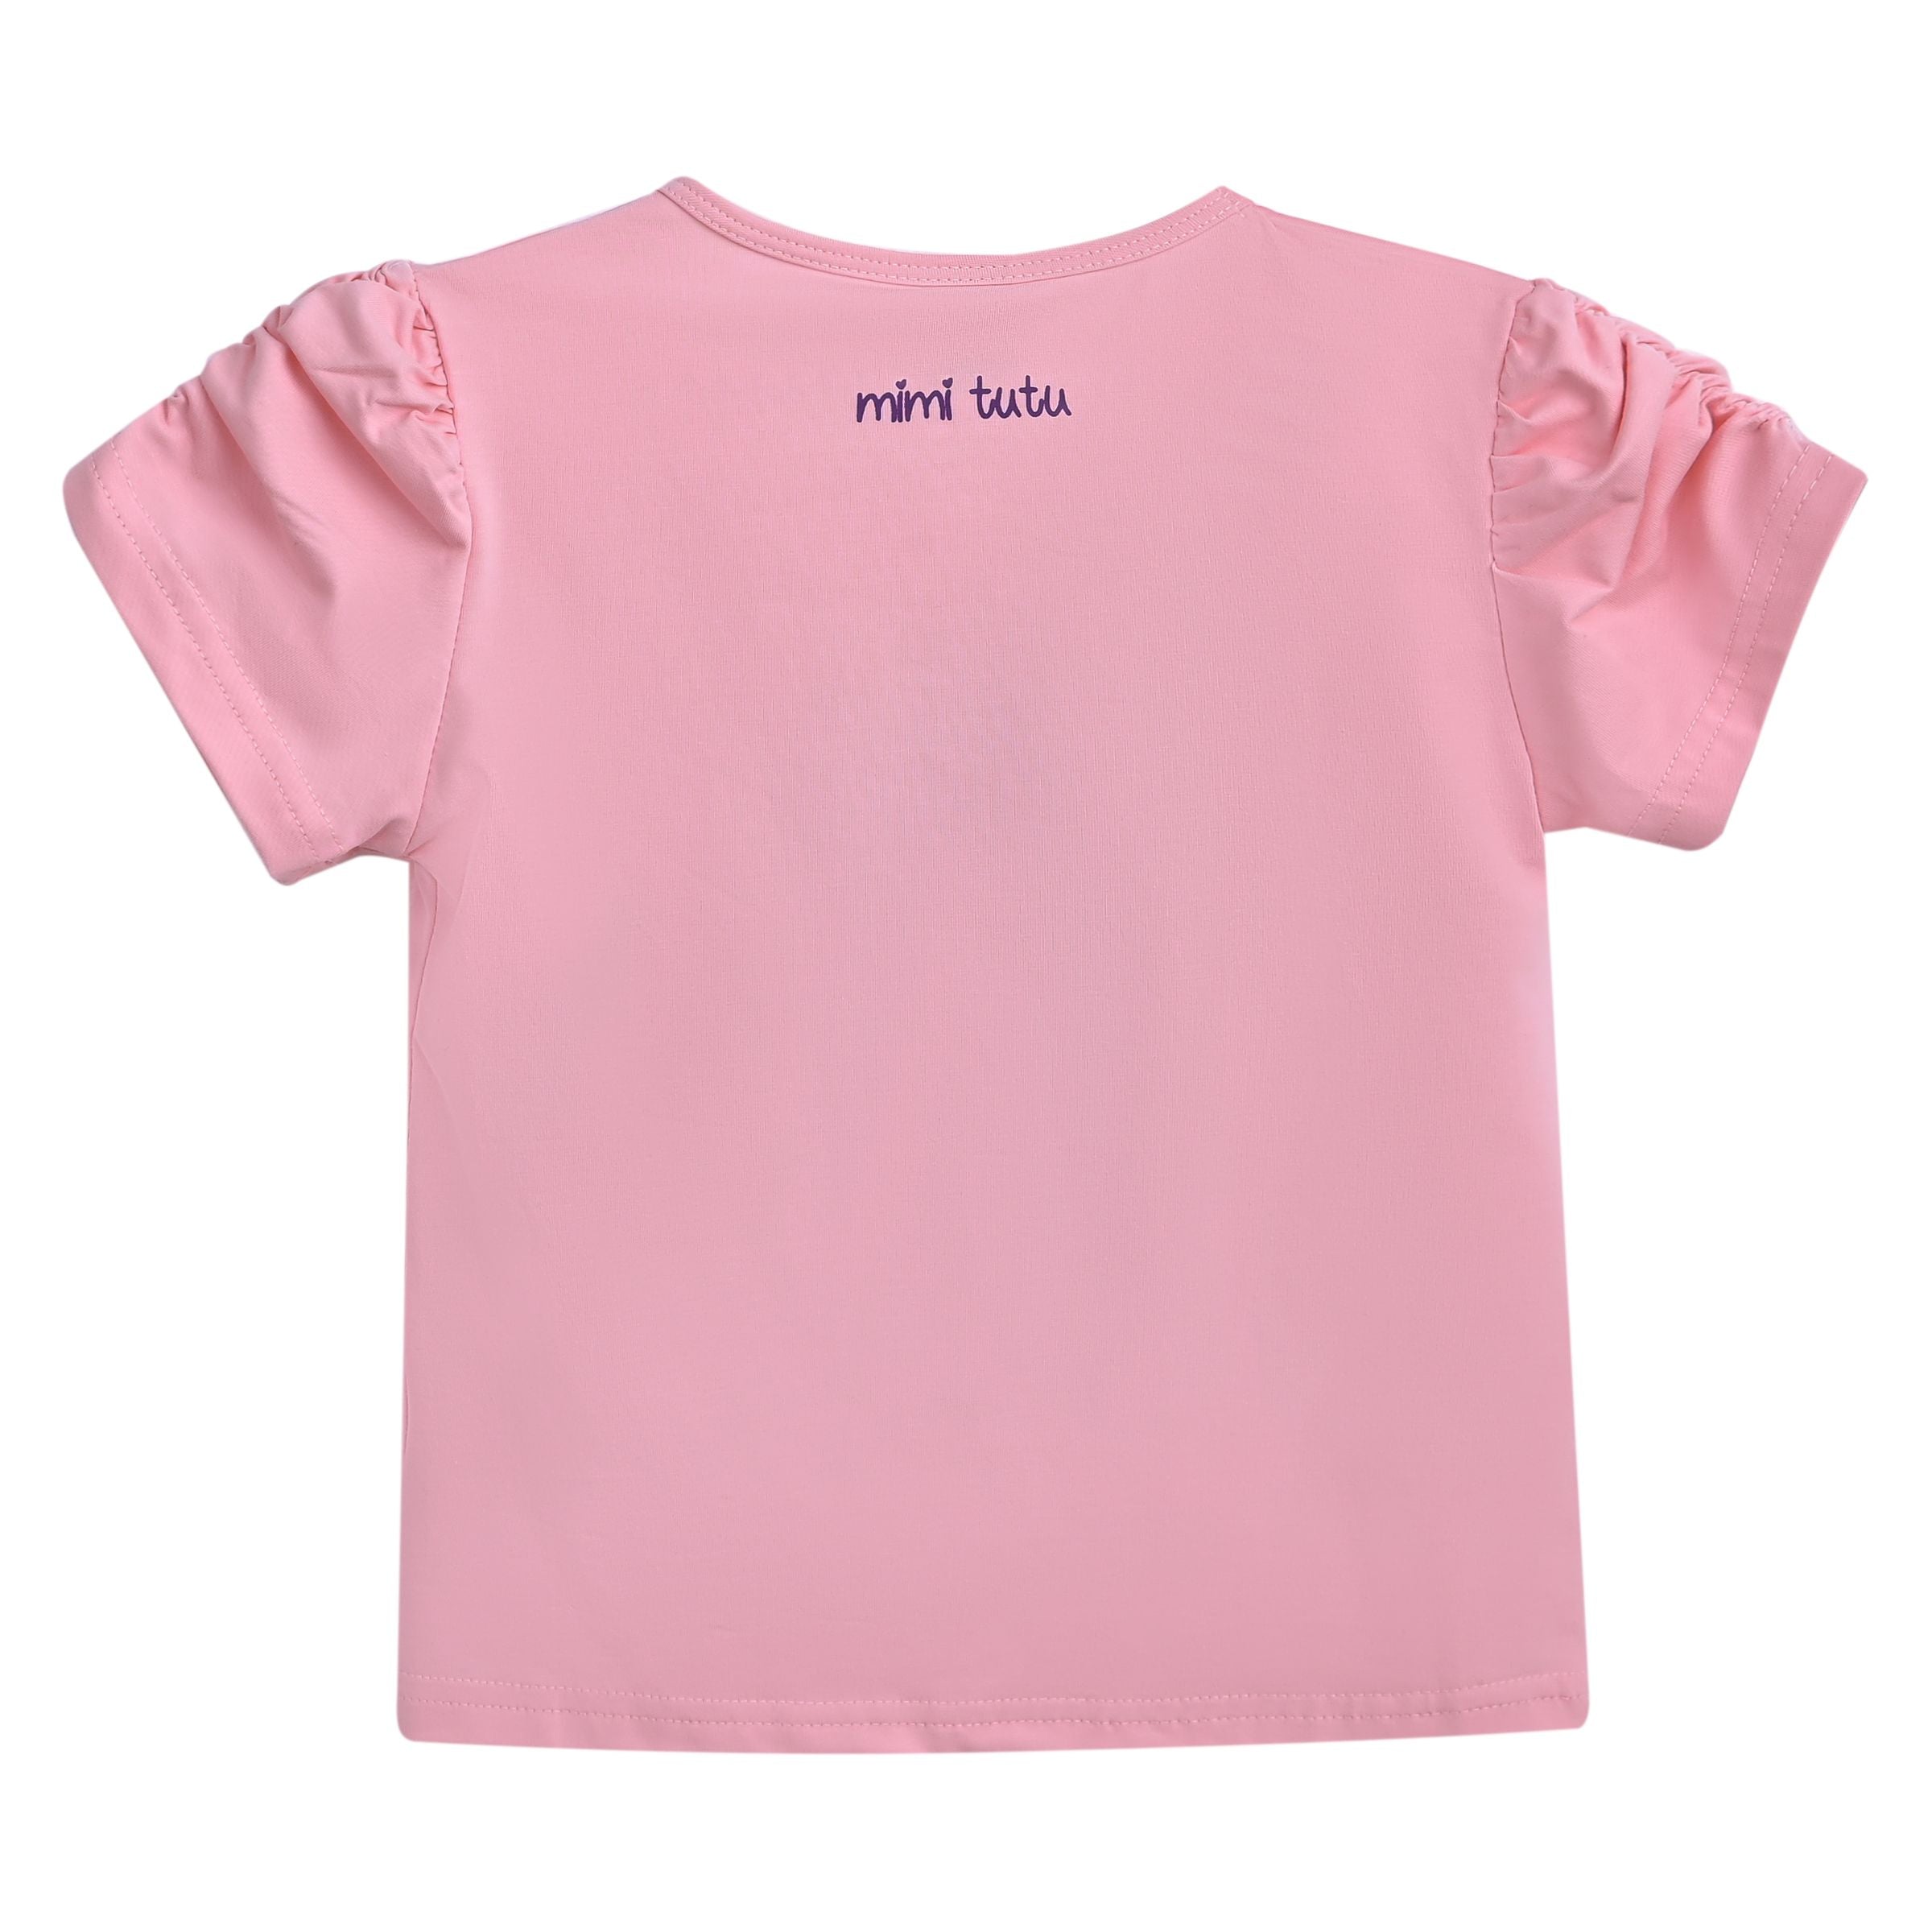 kids-atelier-mimi-tutu-kid-baby-girl-pink-bear-applique-t-shirt-mt4205-bear-pink